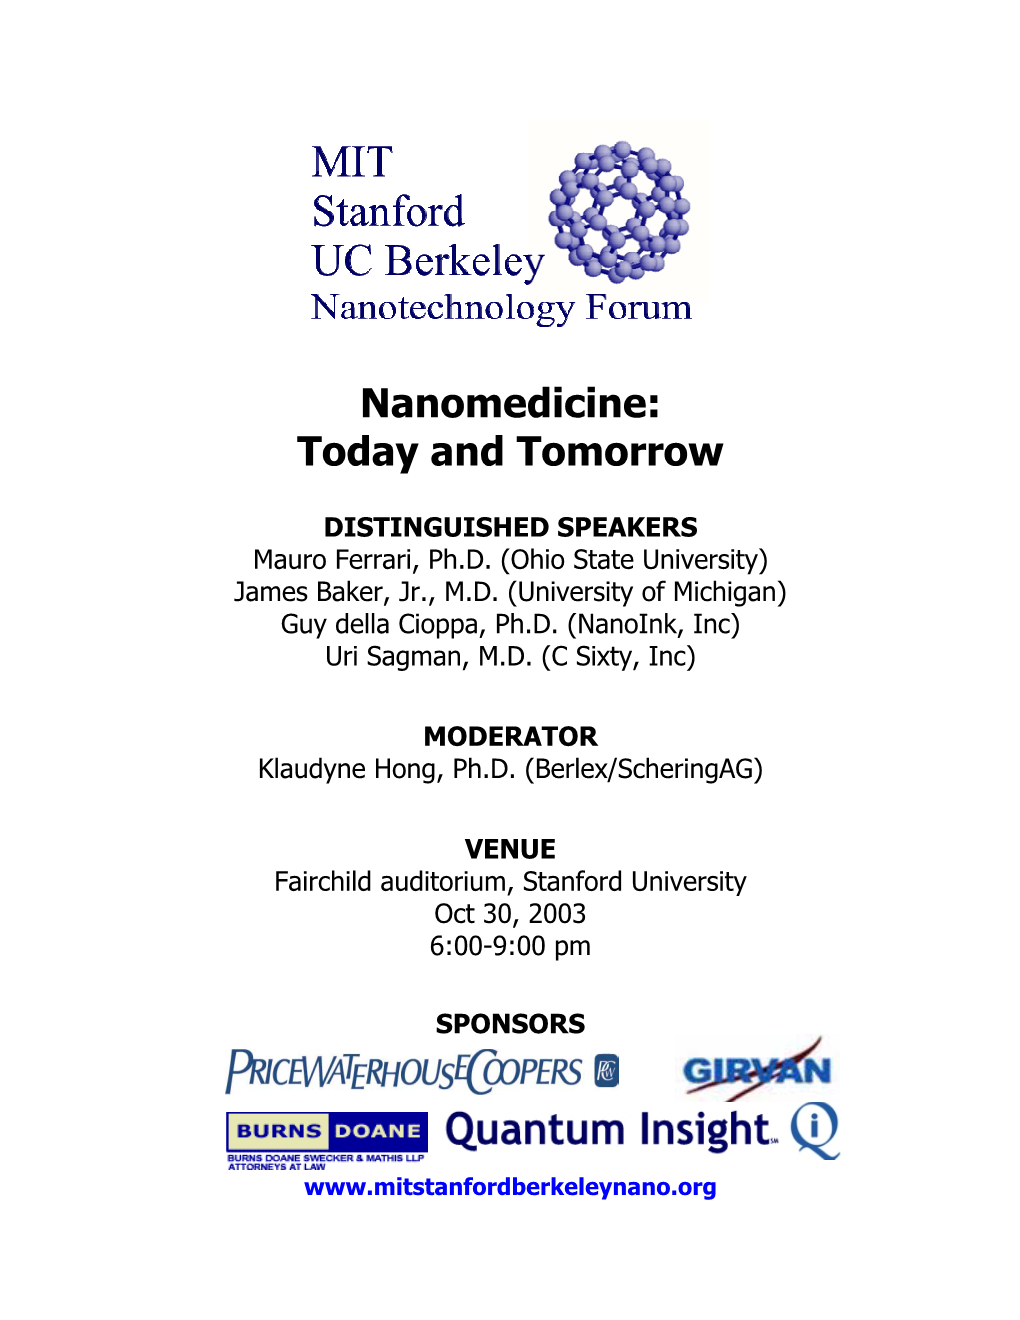 Nanomedicine: Today and Tomorrow